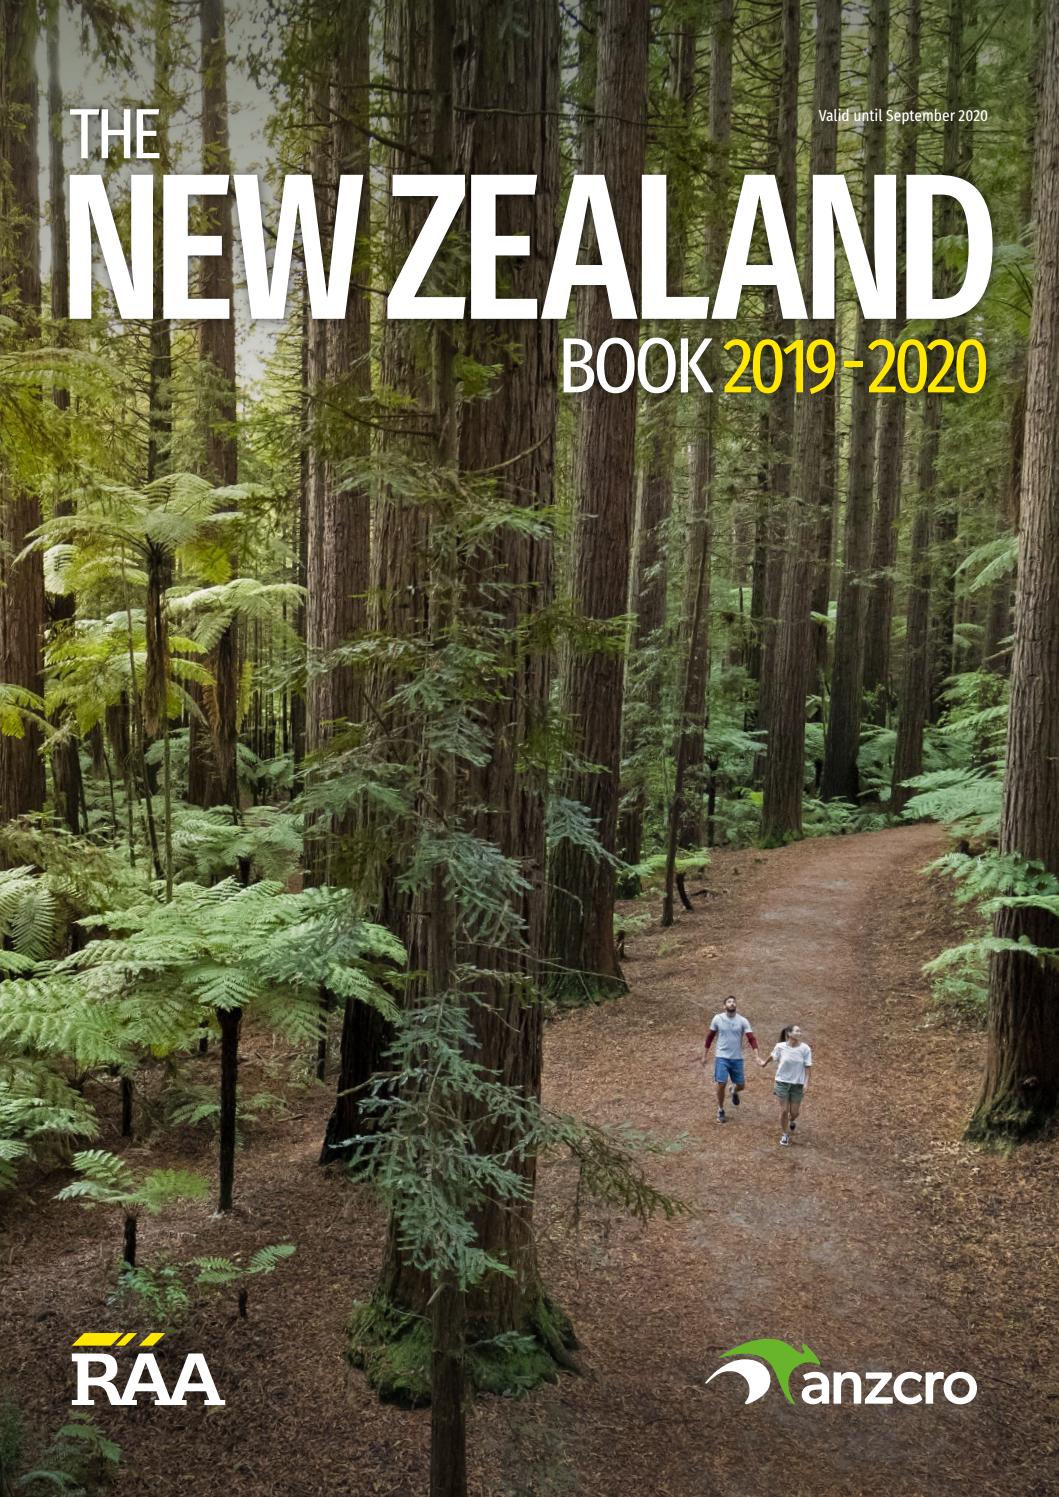 Pergola Alu Brico Depot Frais the New Zealand Book 2019 20 Raa by Holiday Experts issuu